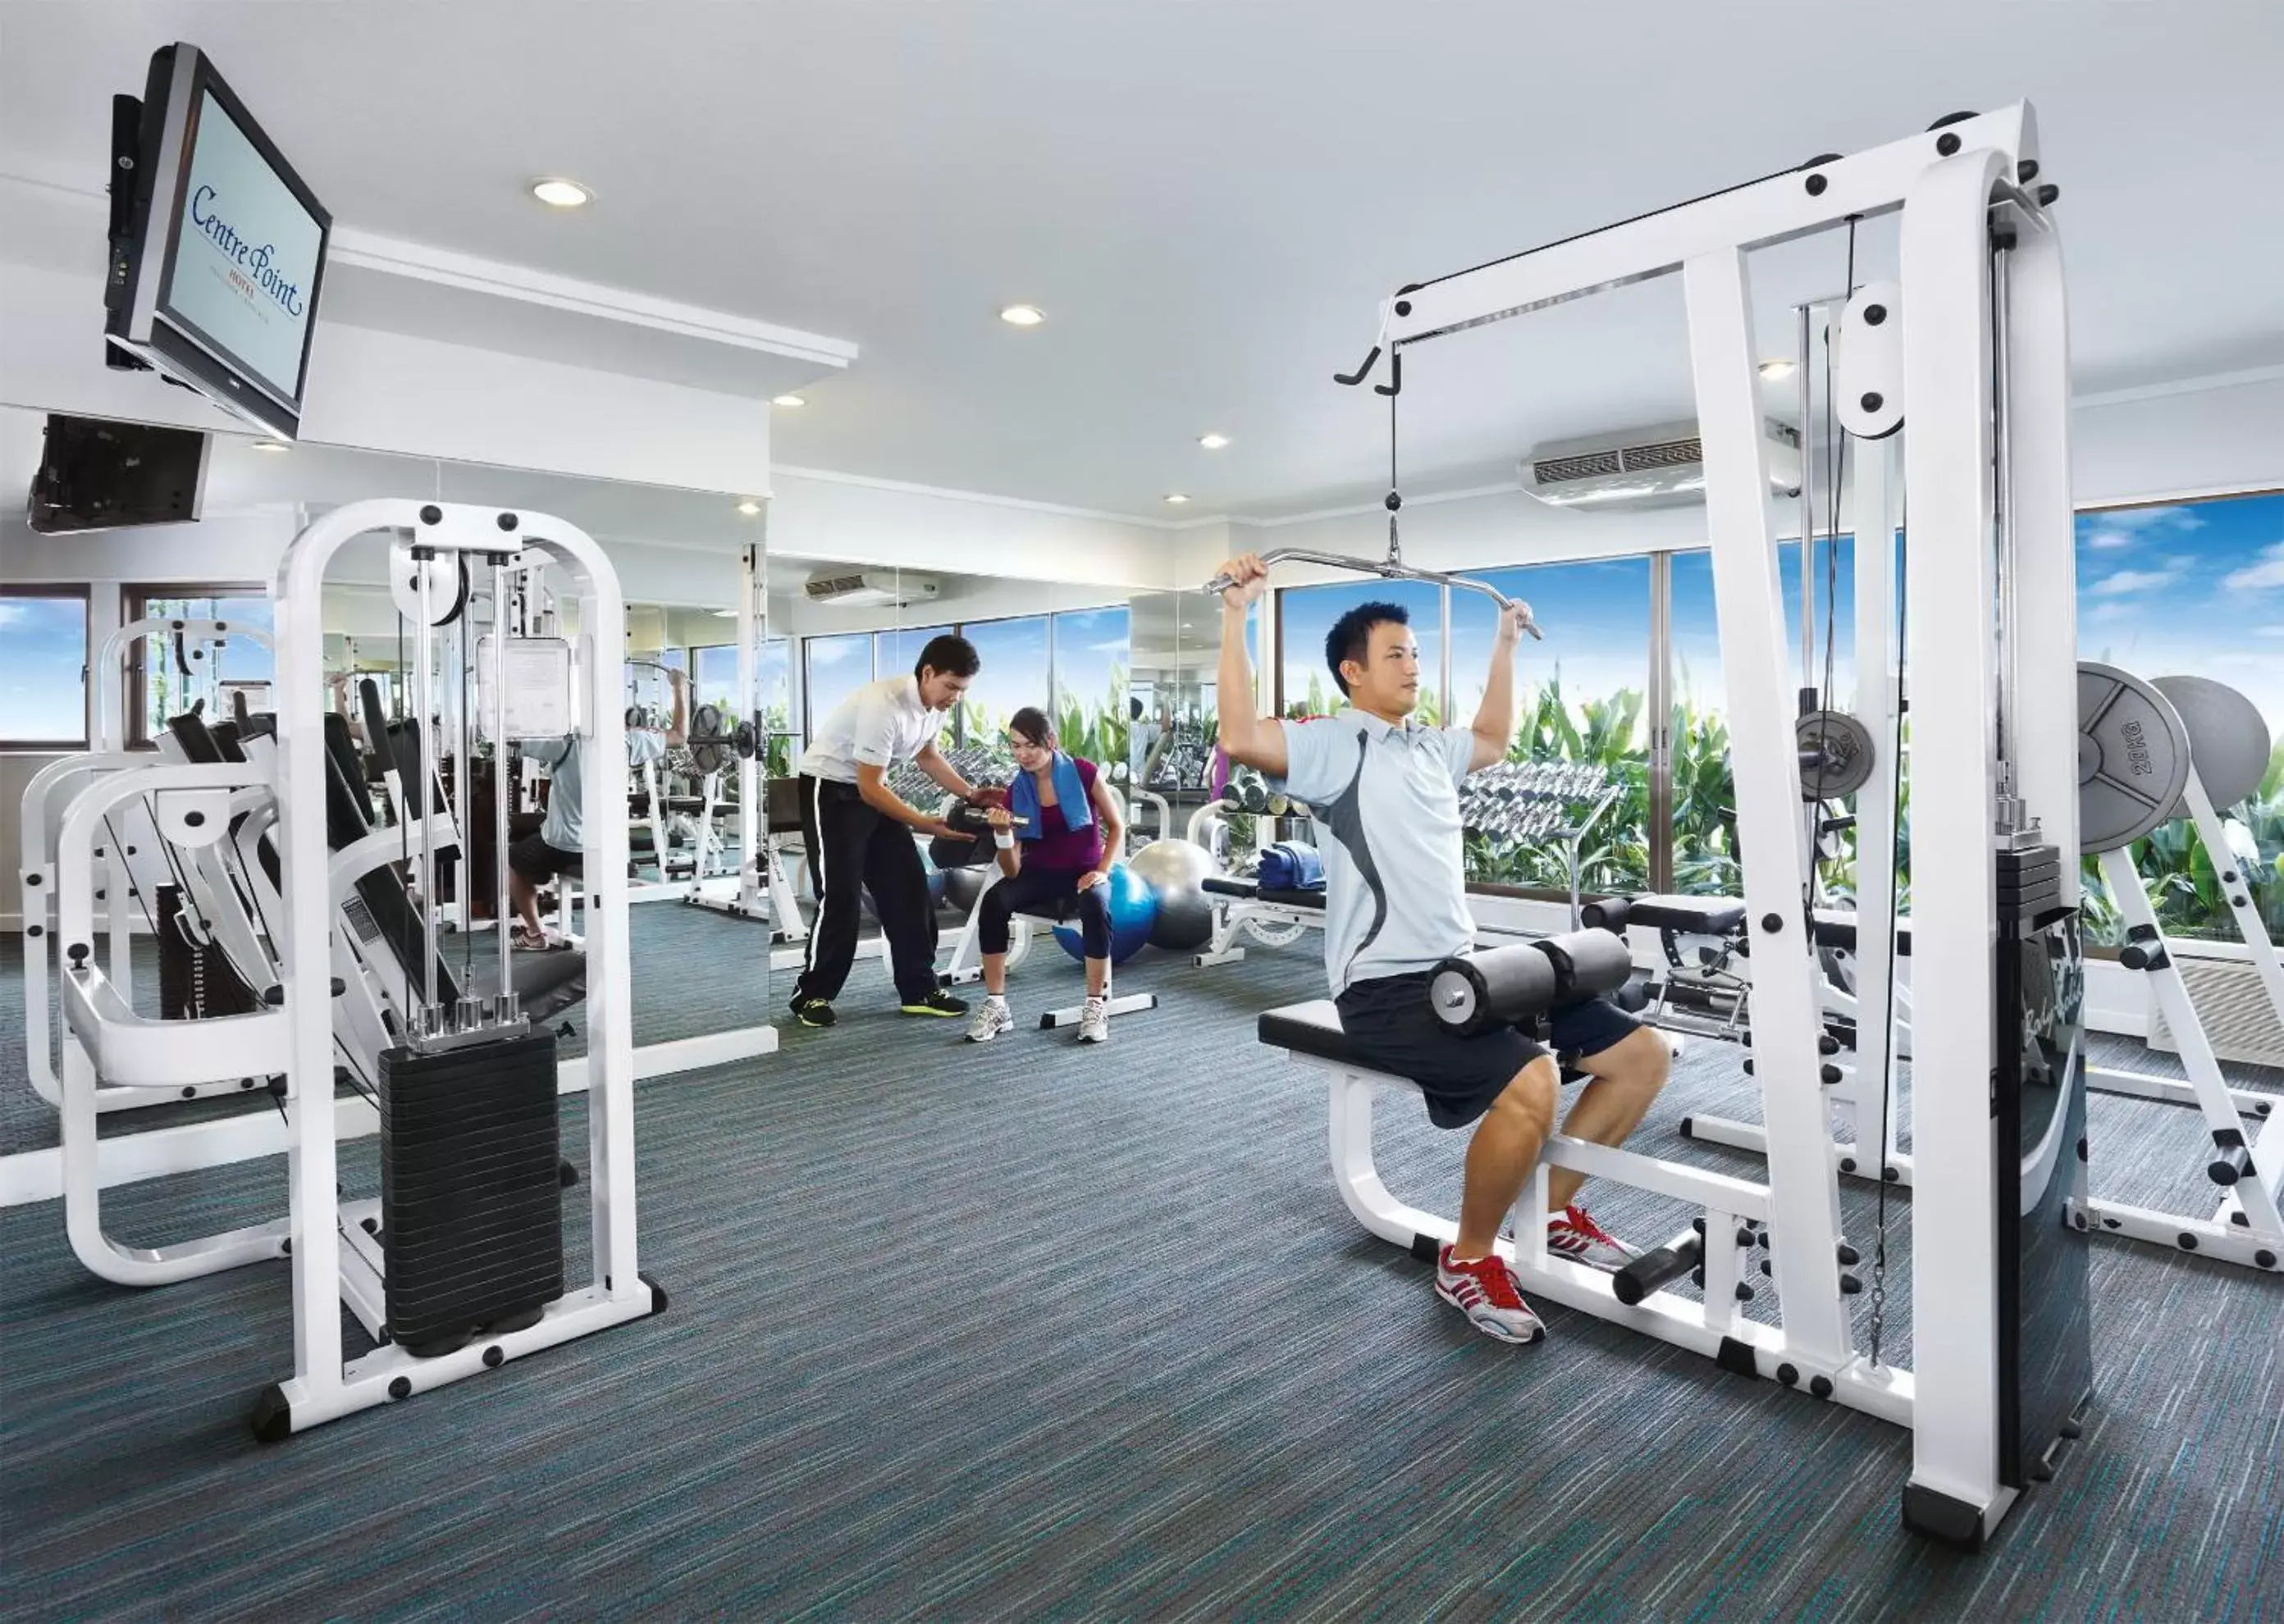 Fitness centre/facilities, Fitness Center/Facilities in Centre Point Pratunam